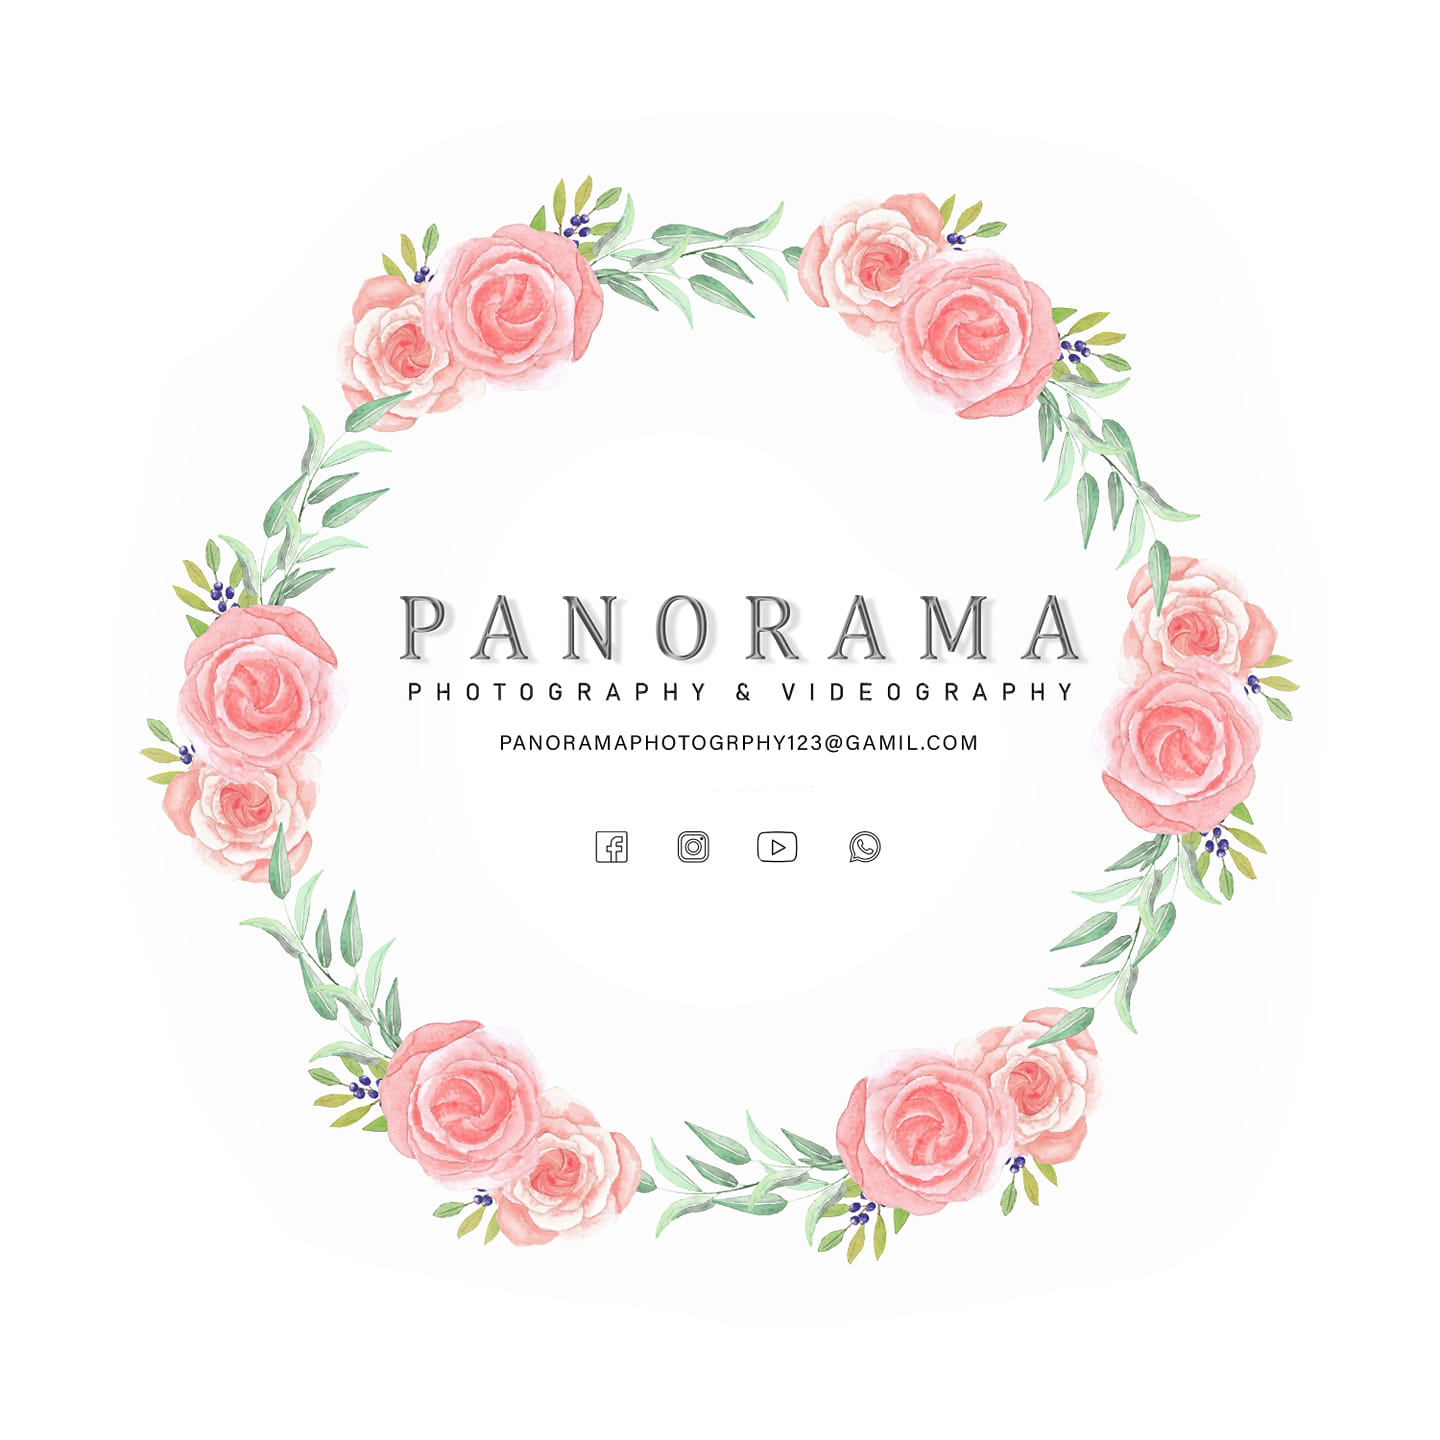 Panorama Photography & Videography